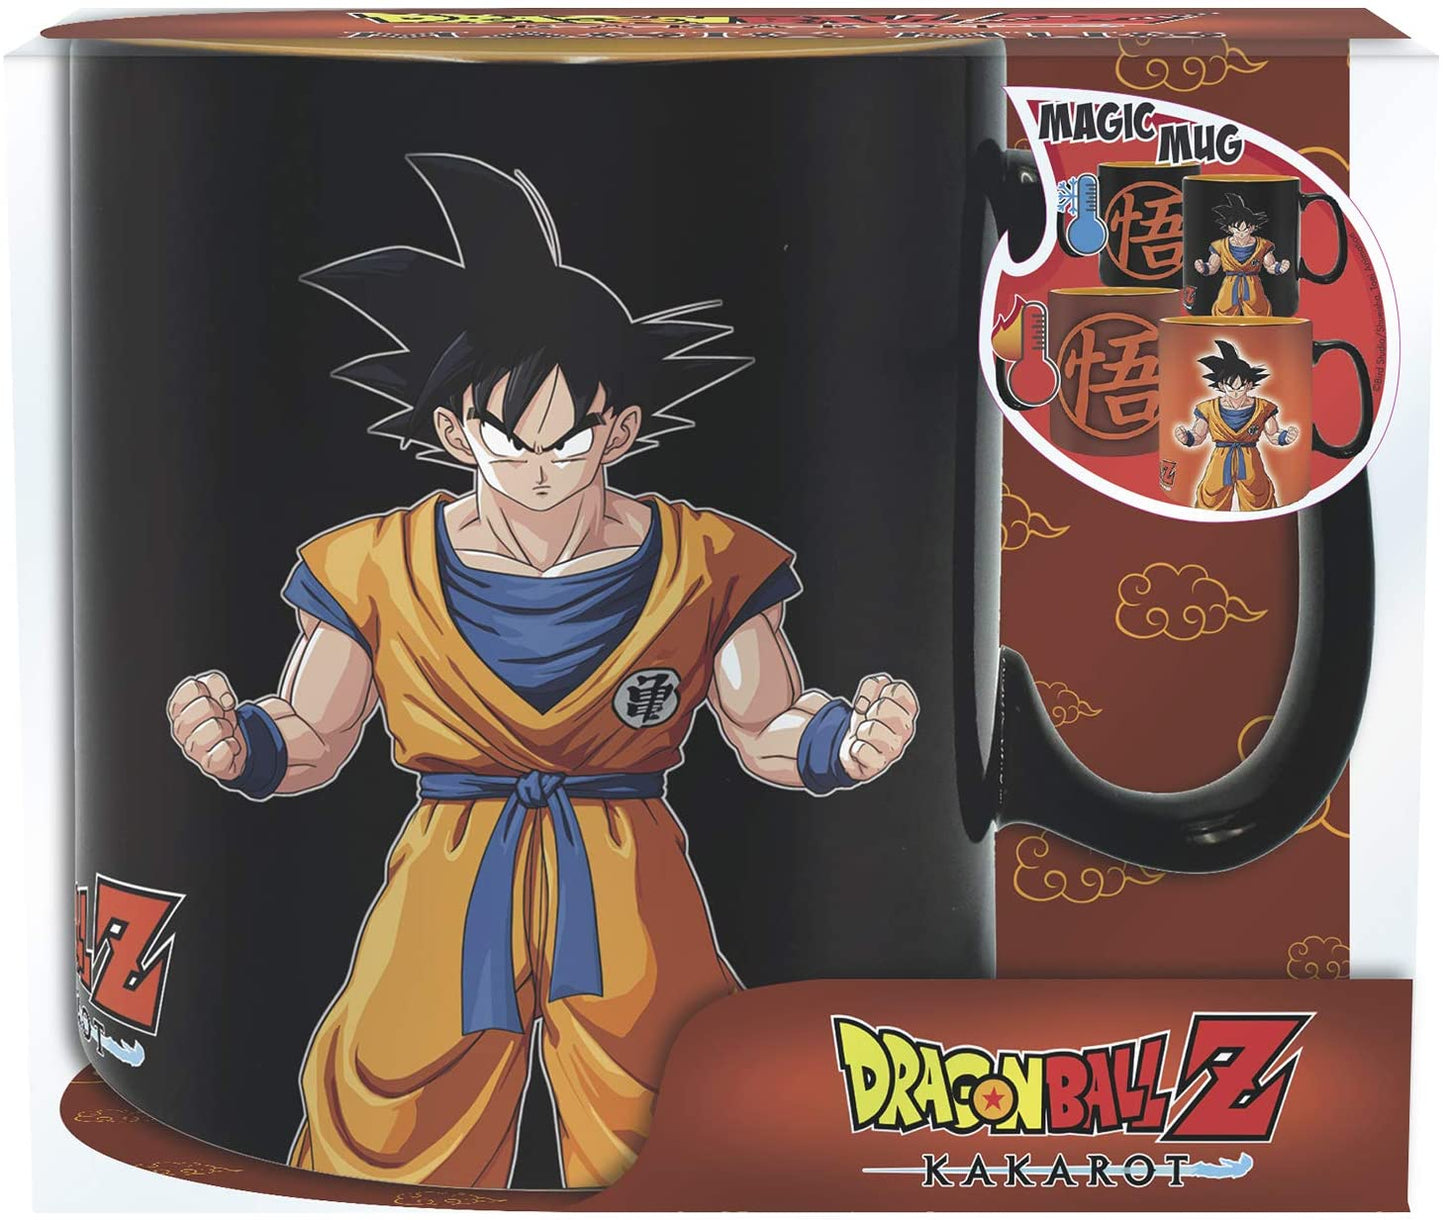 Dragon Ball Z Goku Magic Mug Wärmewechsel